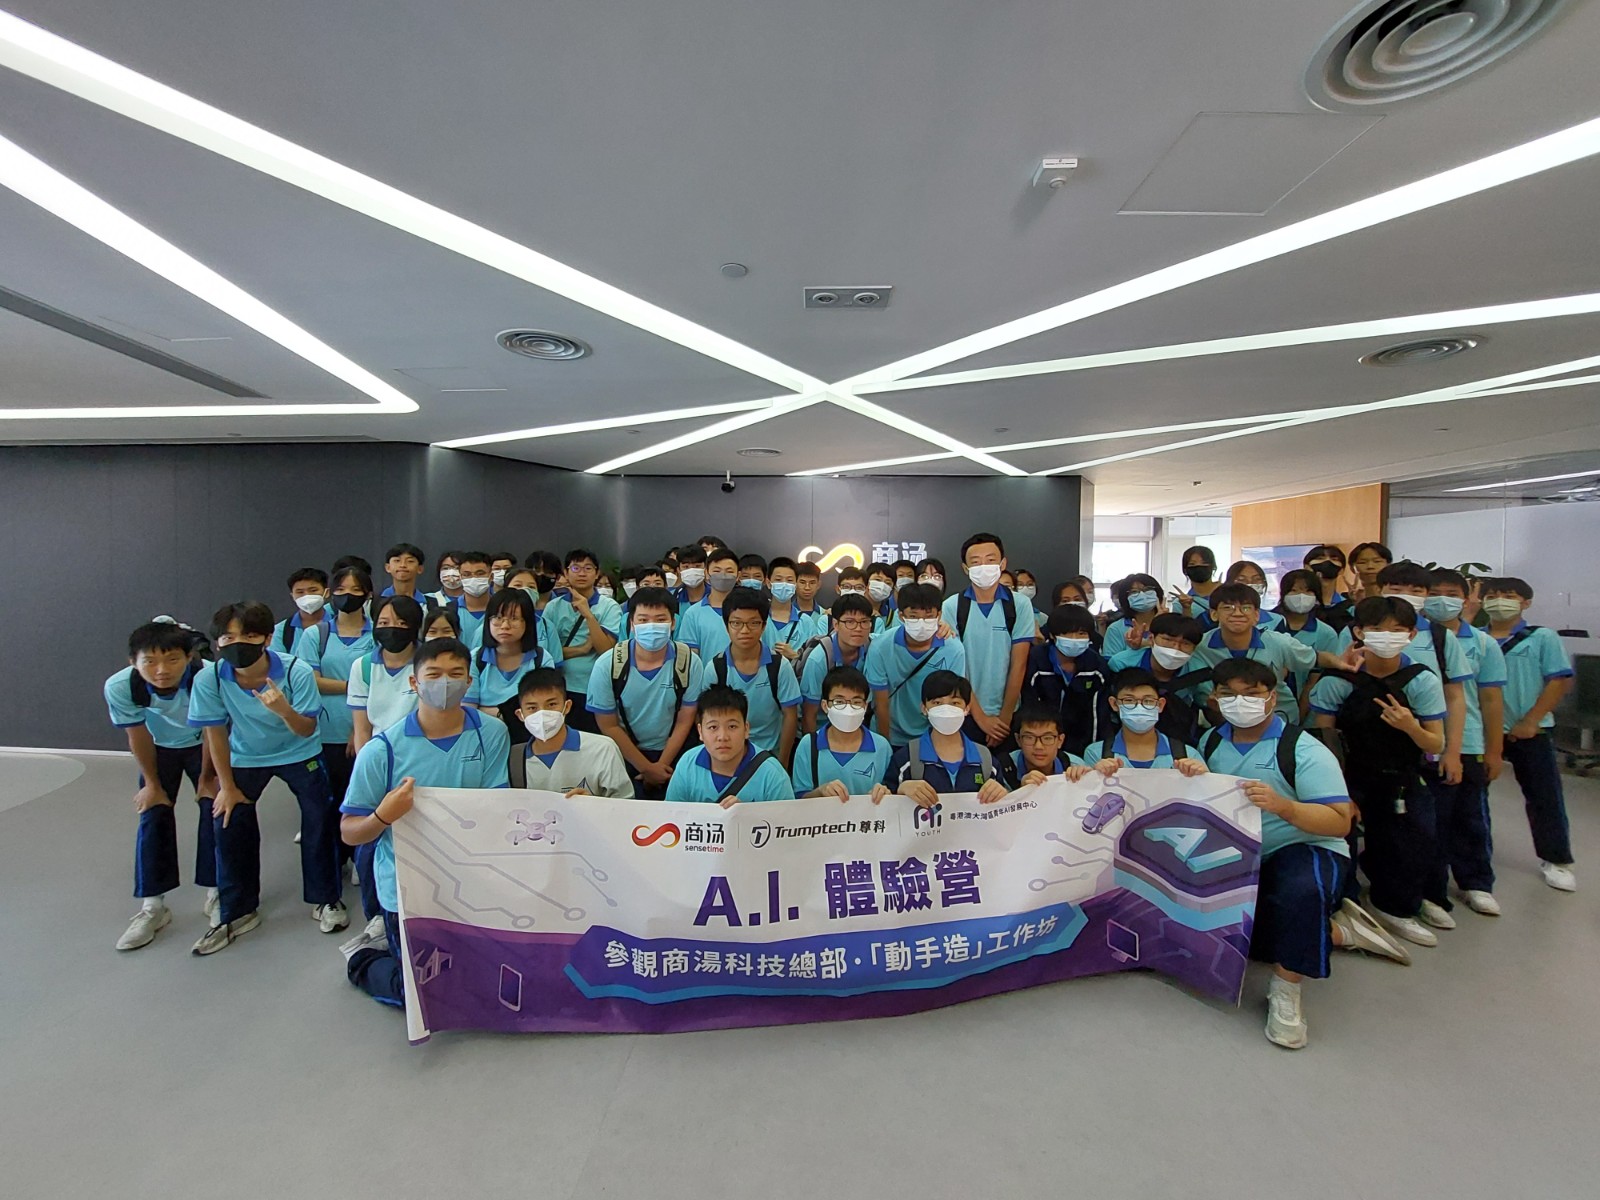 AI Tour - Cheng Chek Chee Secondary School Of Sai Kung and Hang Hau District, NT